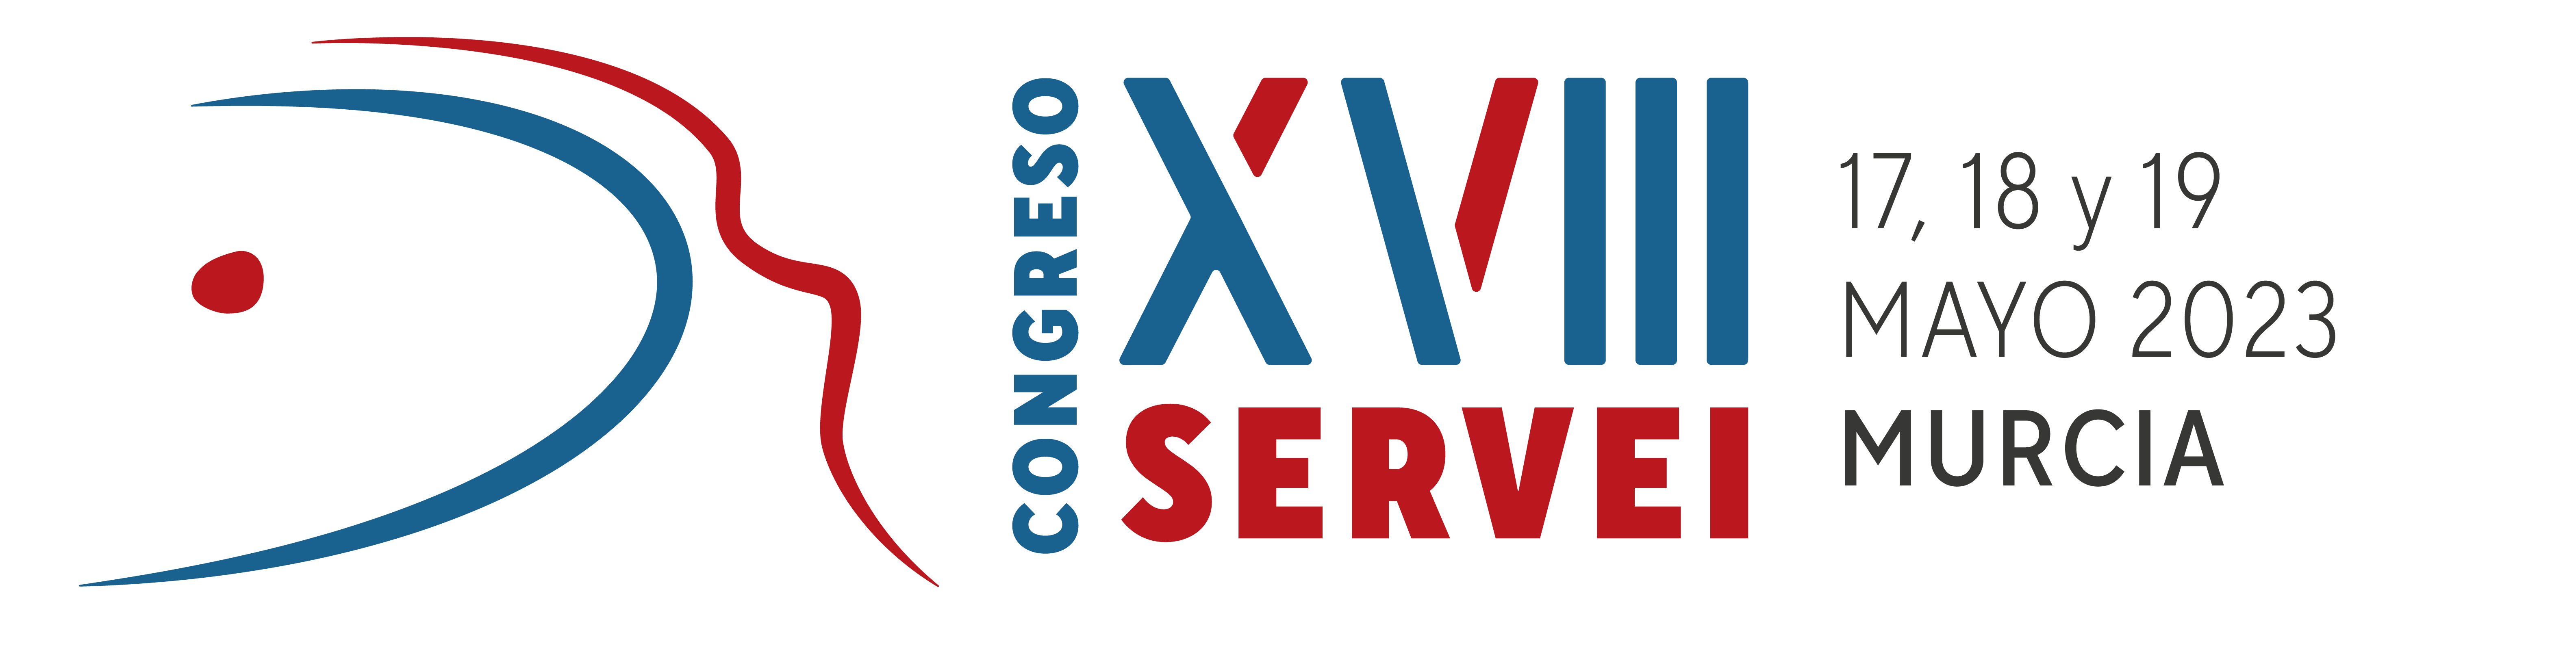 Congeso SERVEI 2023 Logo